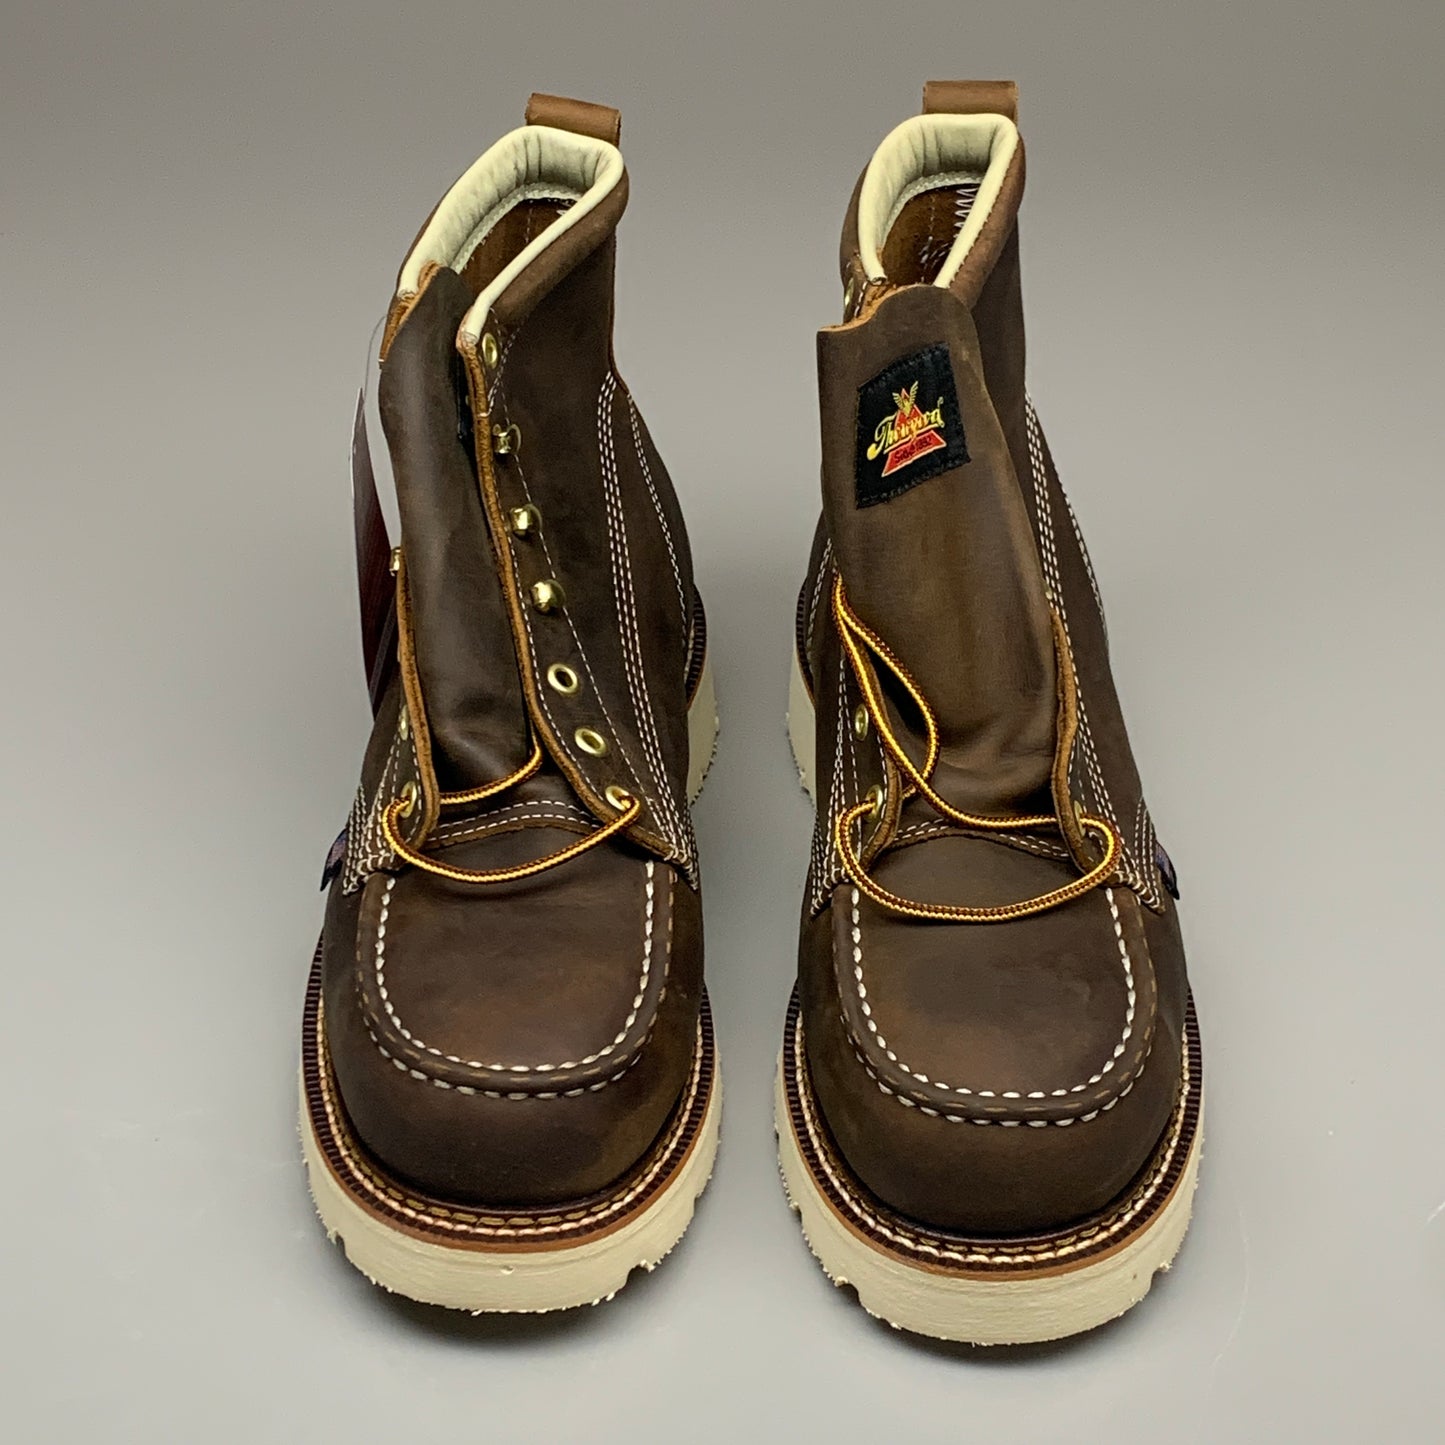 THOROGOOD Men's 6" Steel Toe Work Boot Sz 8.5 W D 804-4375 (New)